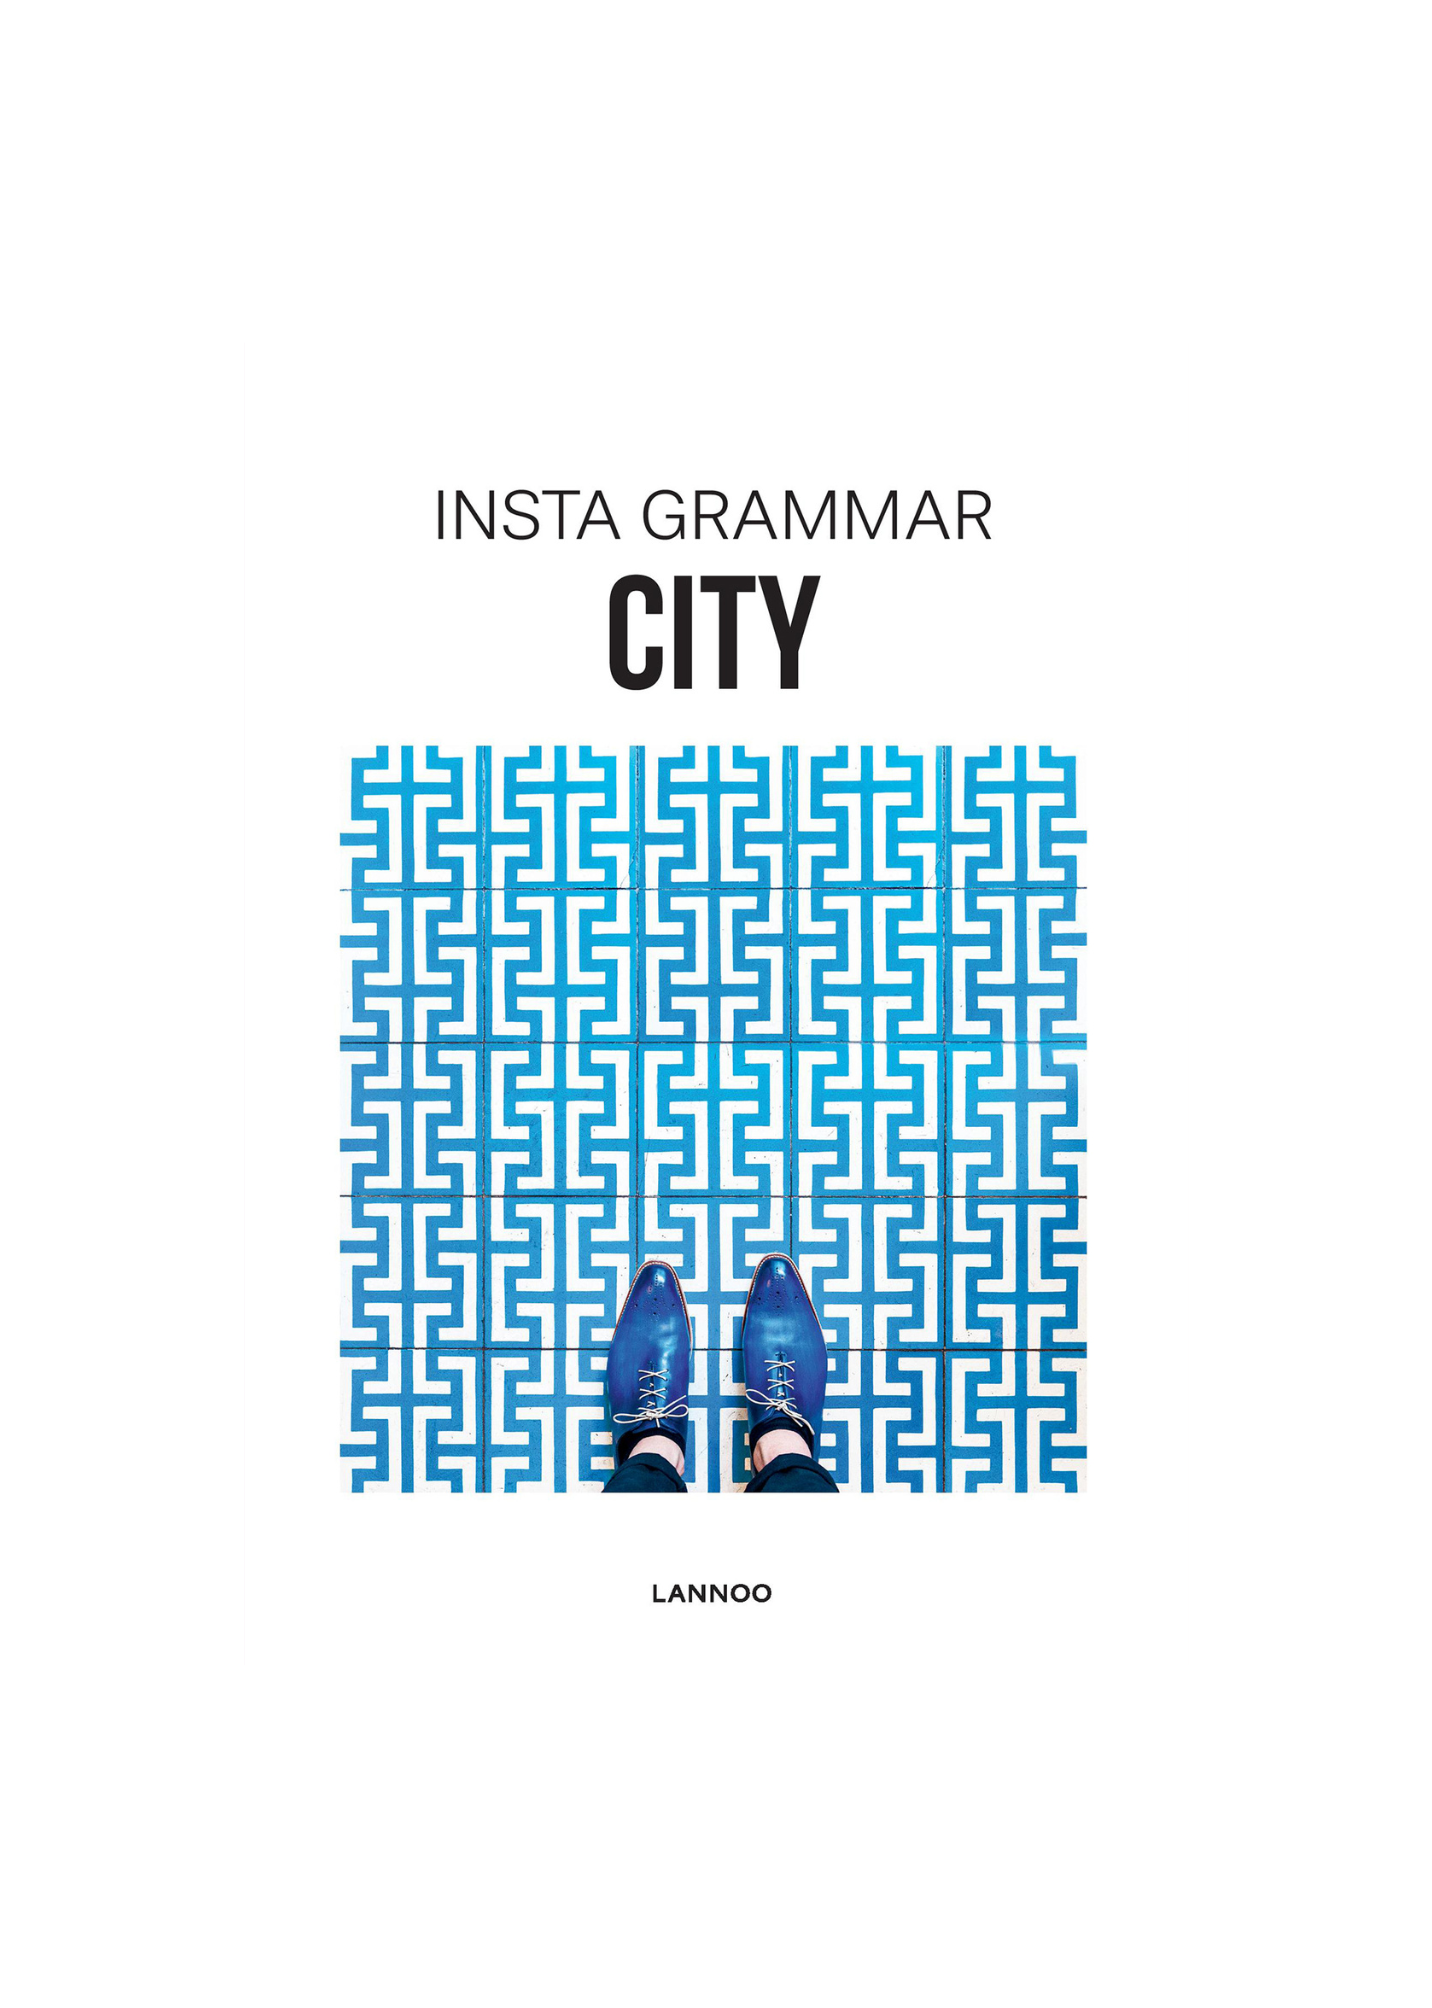 INSTA GRAMMAR // City